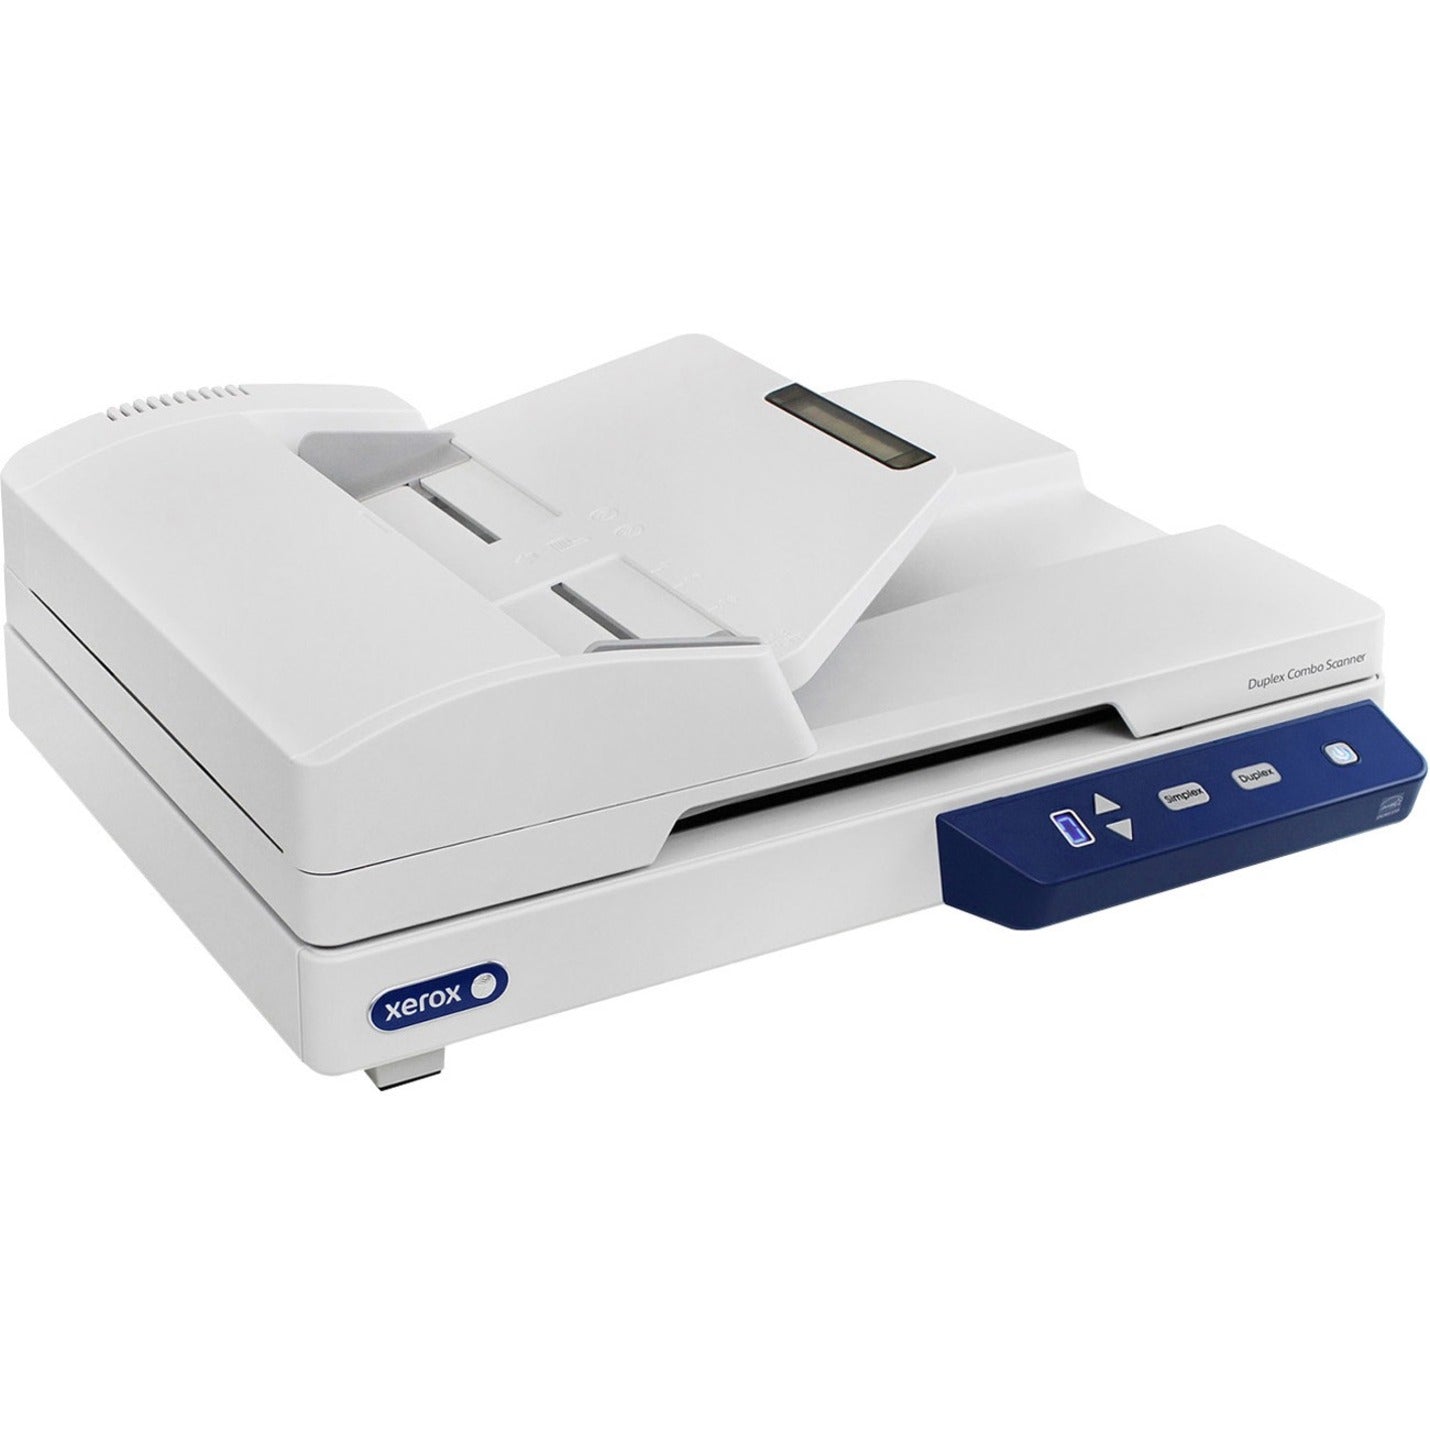 Xerox Duplex Travel Scanner - sheetfed scanner - portable - USB